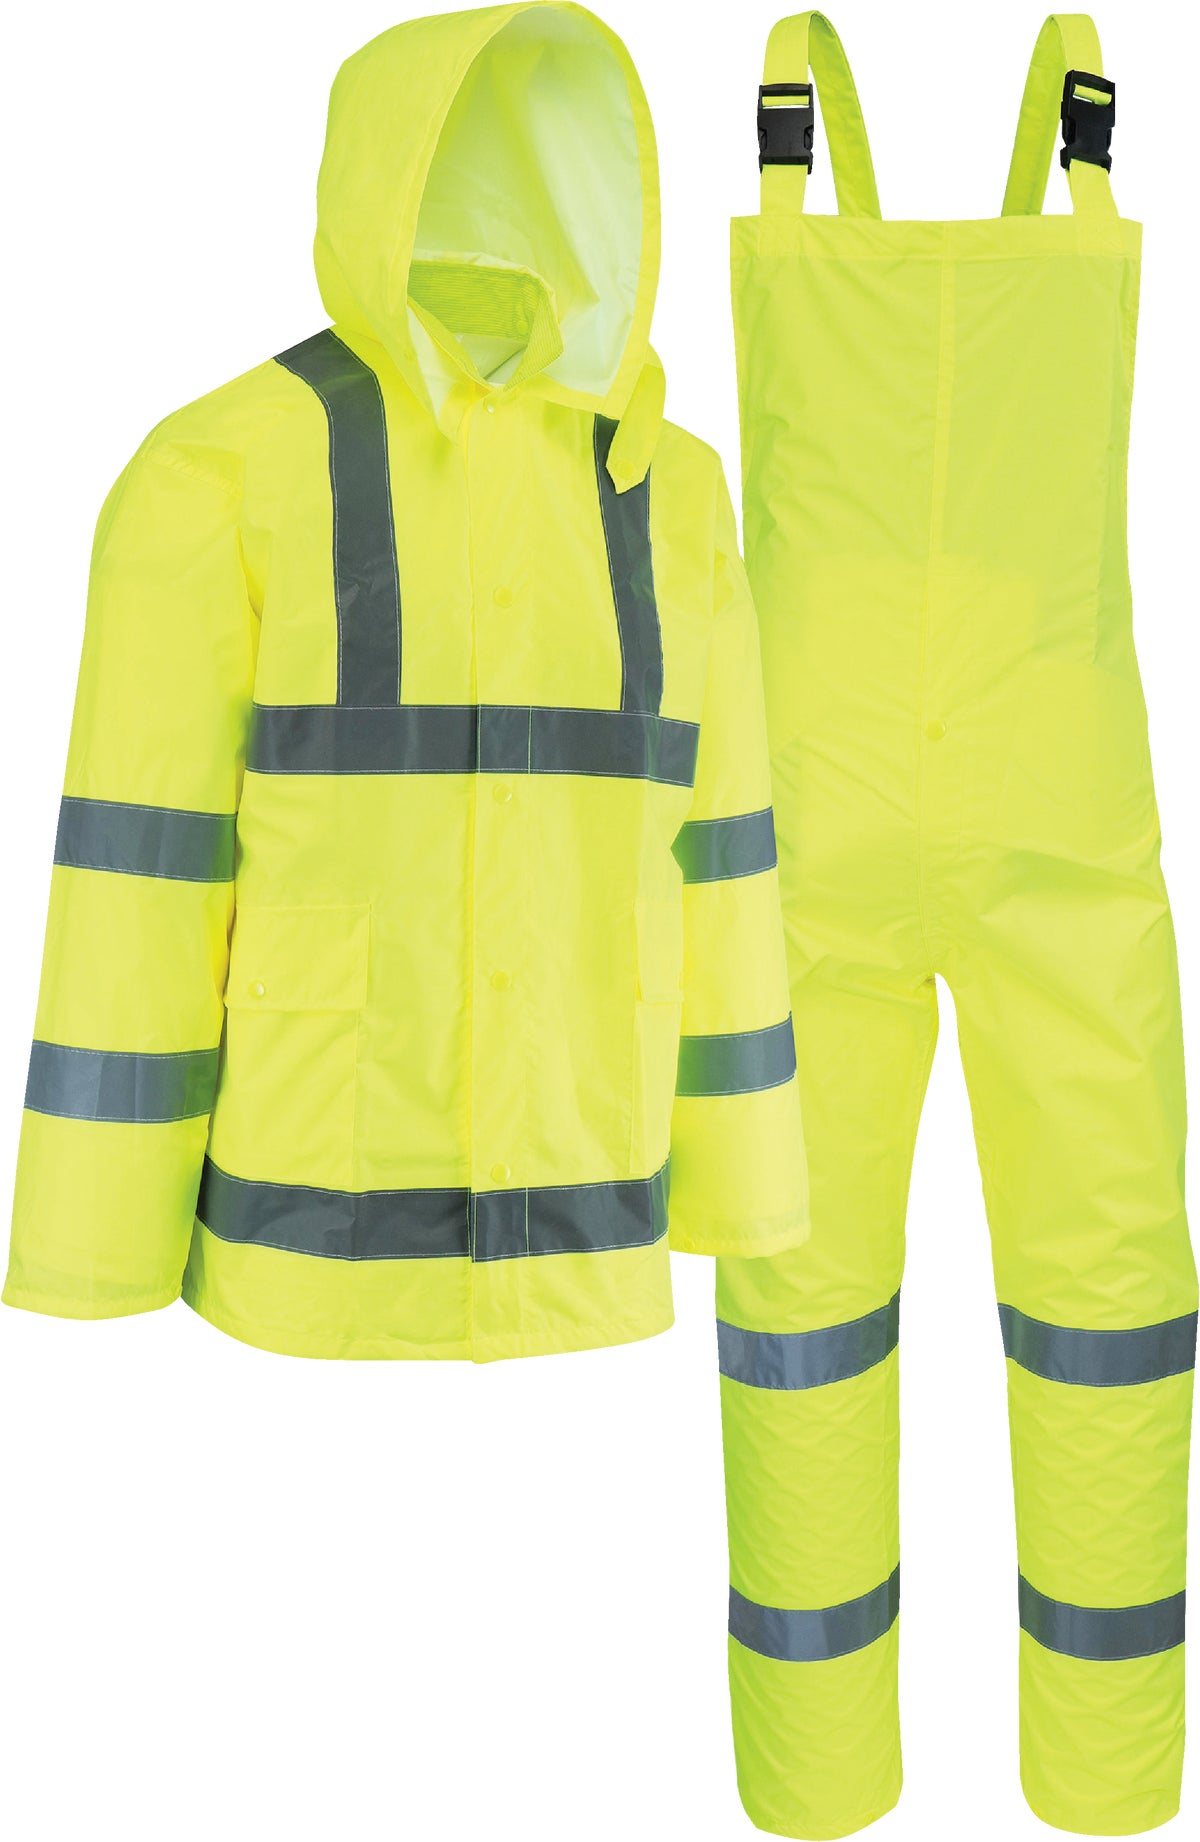 Buy West Chester Protective Gear 3-Piece Hi Visibility Rain Suit 2XL ...